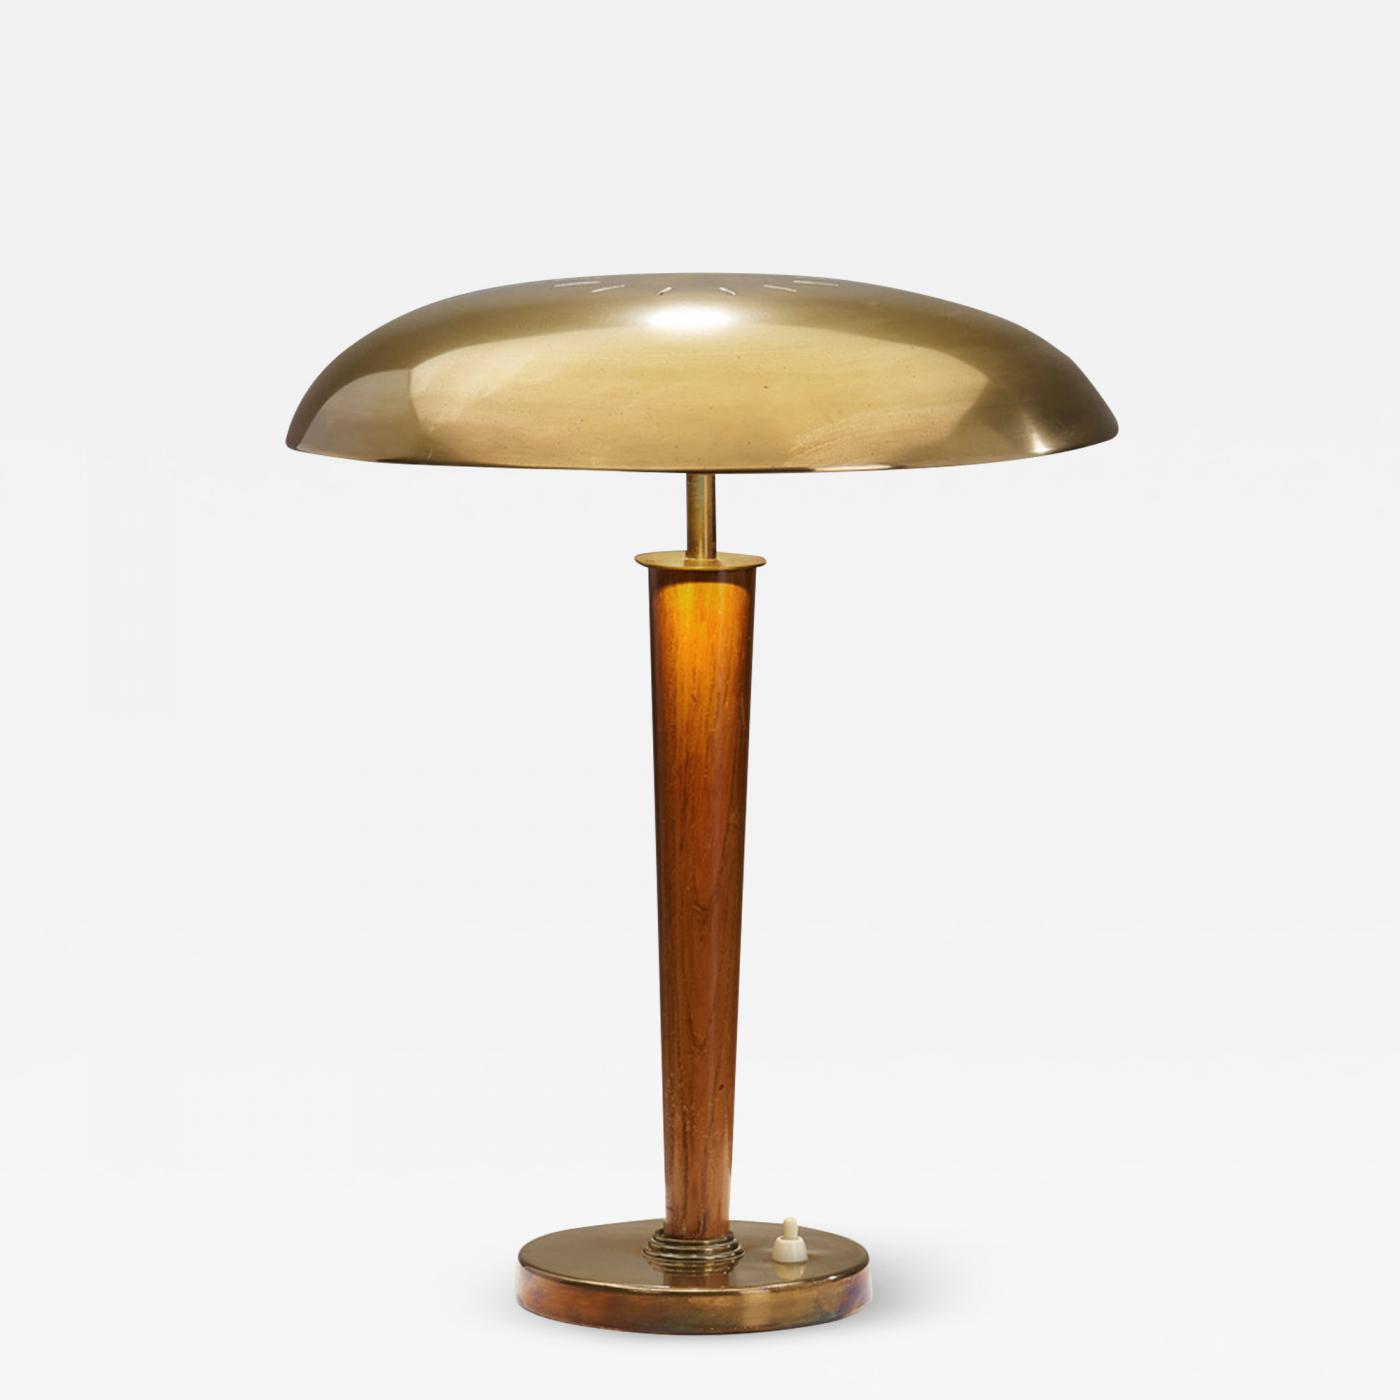 Polina Brass Small Table Lamp - New Classics Interiors 1900 Lighting